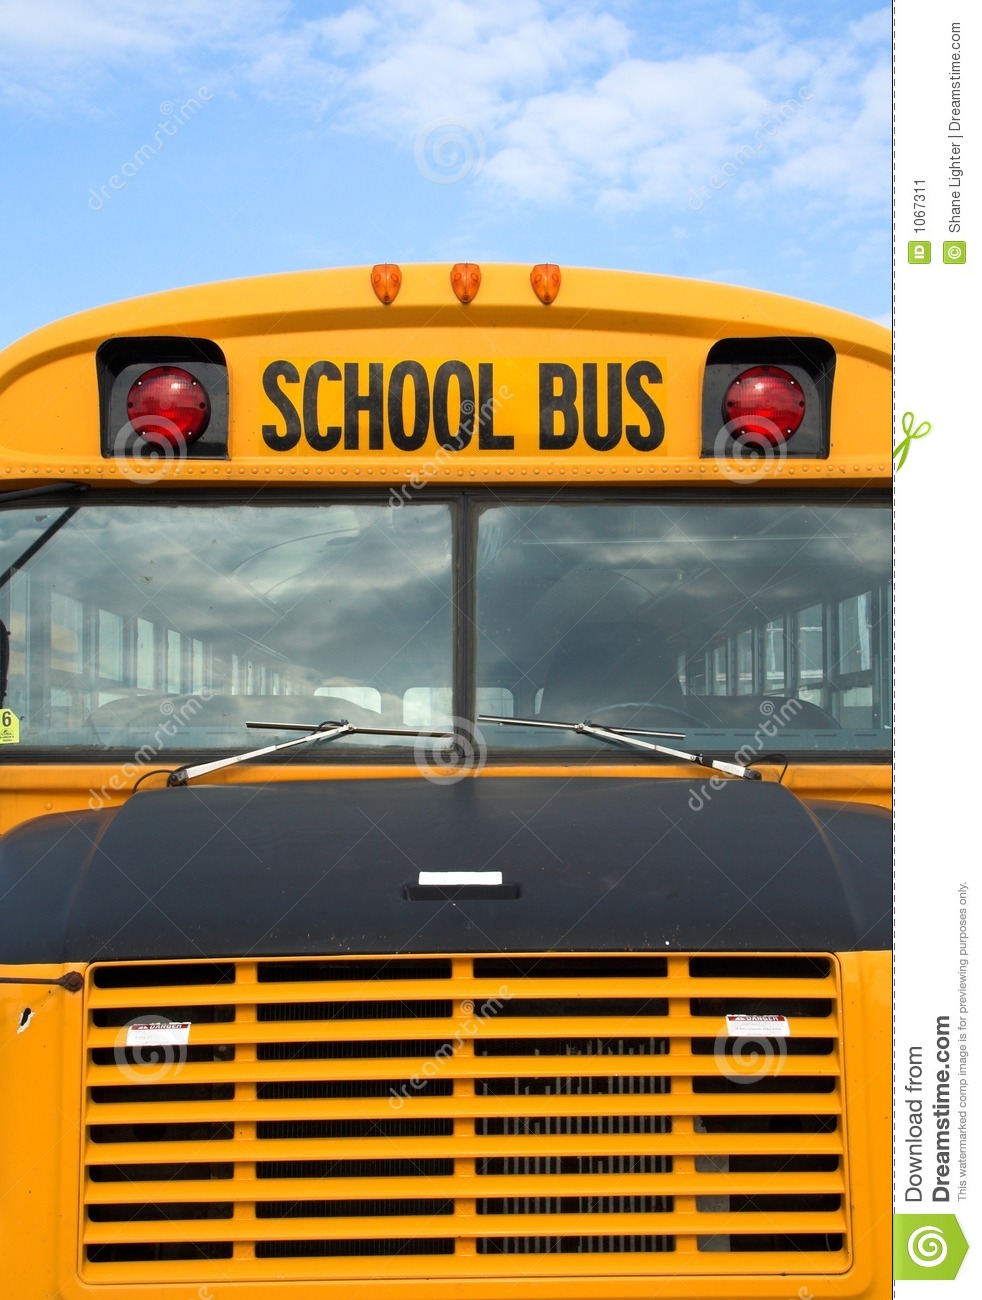 School Bus Stock Image   Image  1067311